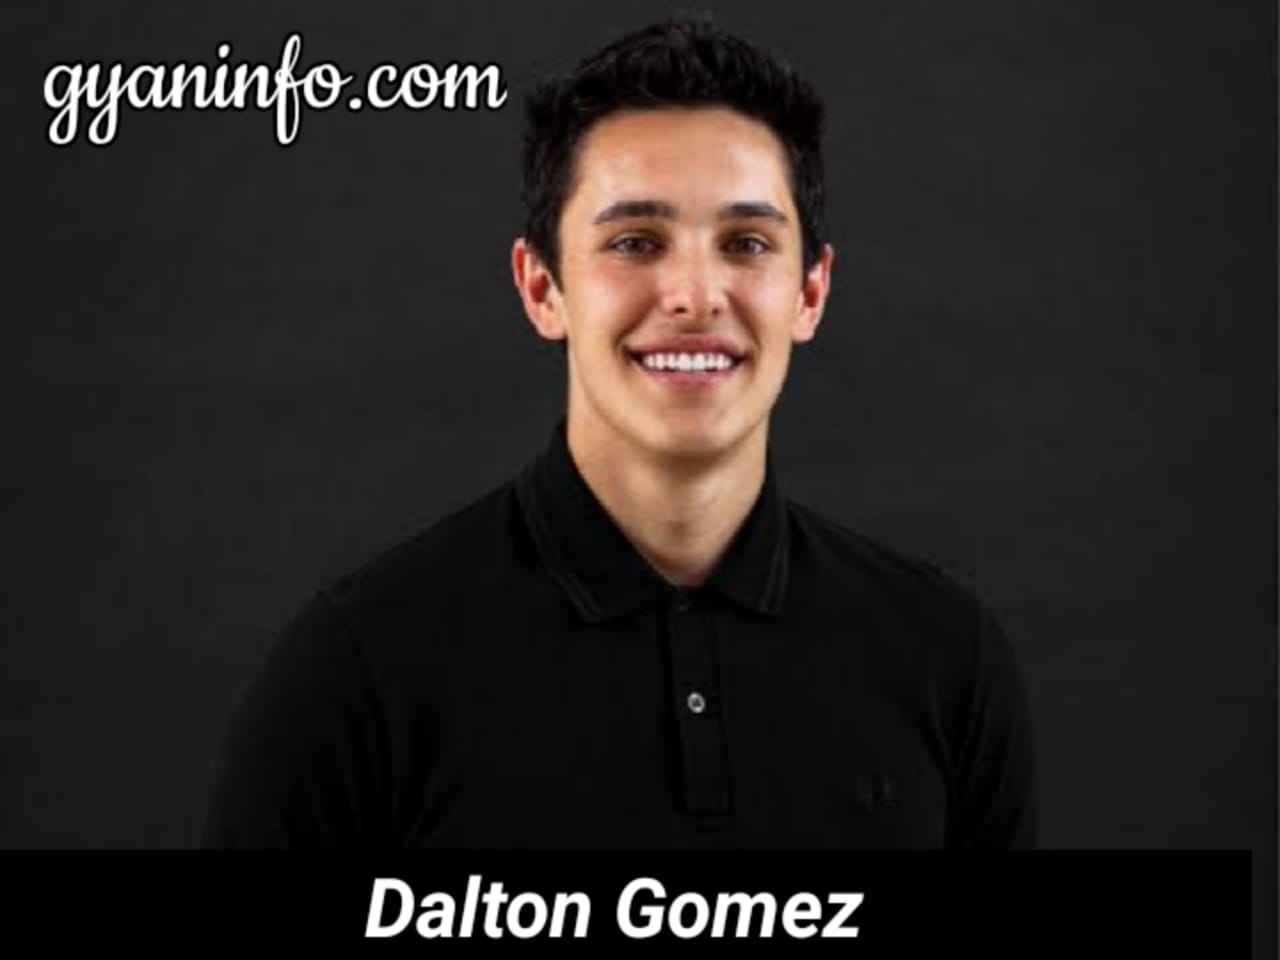 Dalton Gomez Biography, Wiki, Age, Height, Girlfriend, Wife, Family, Net Worth & More